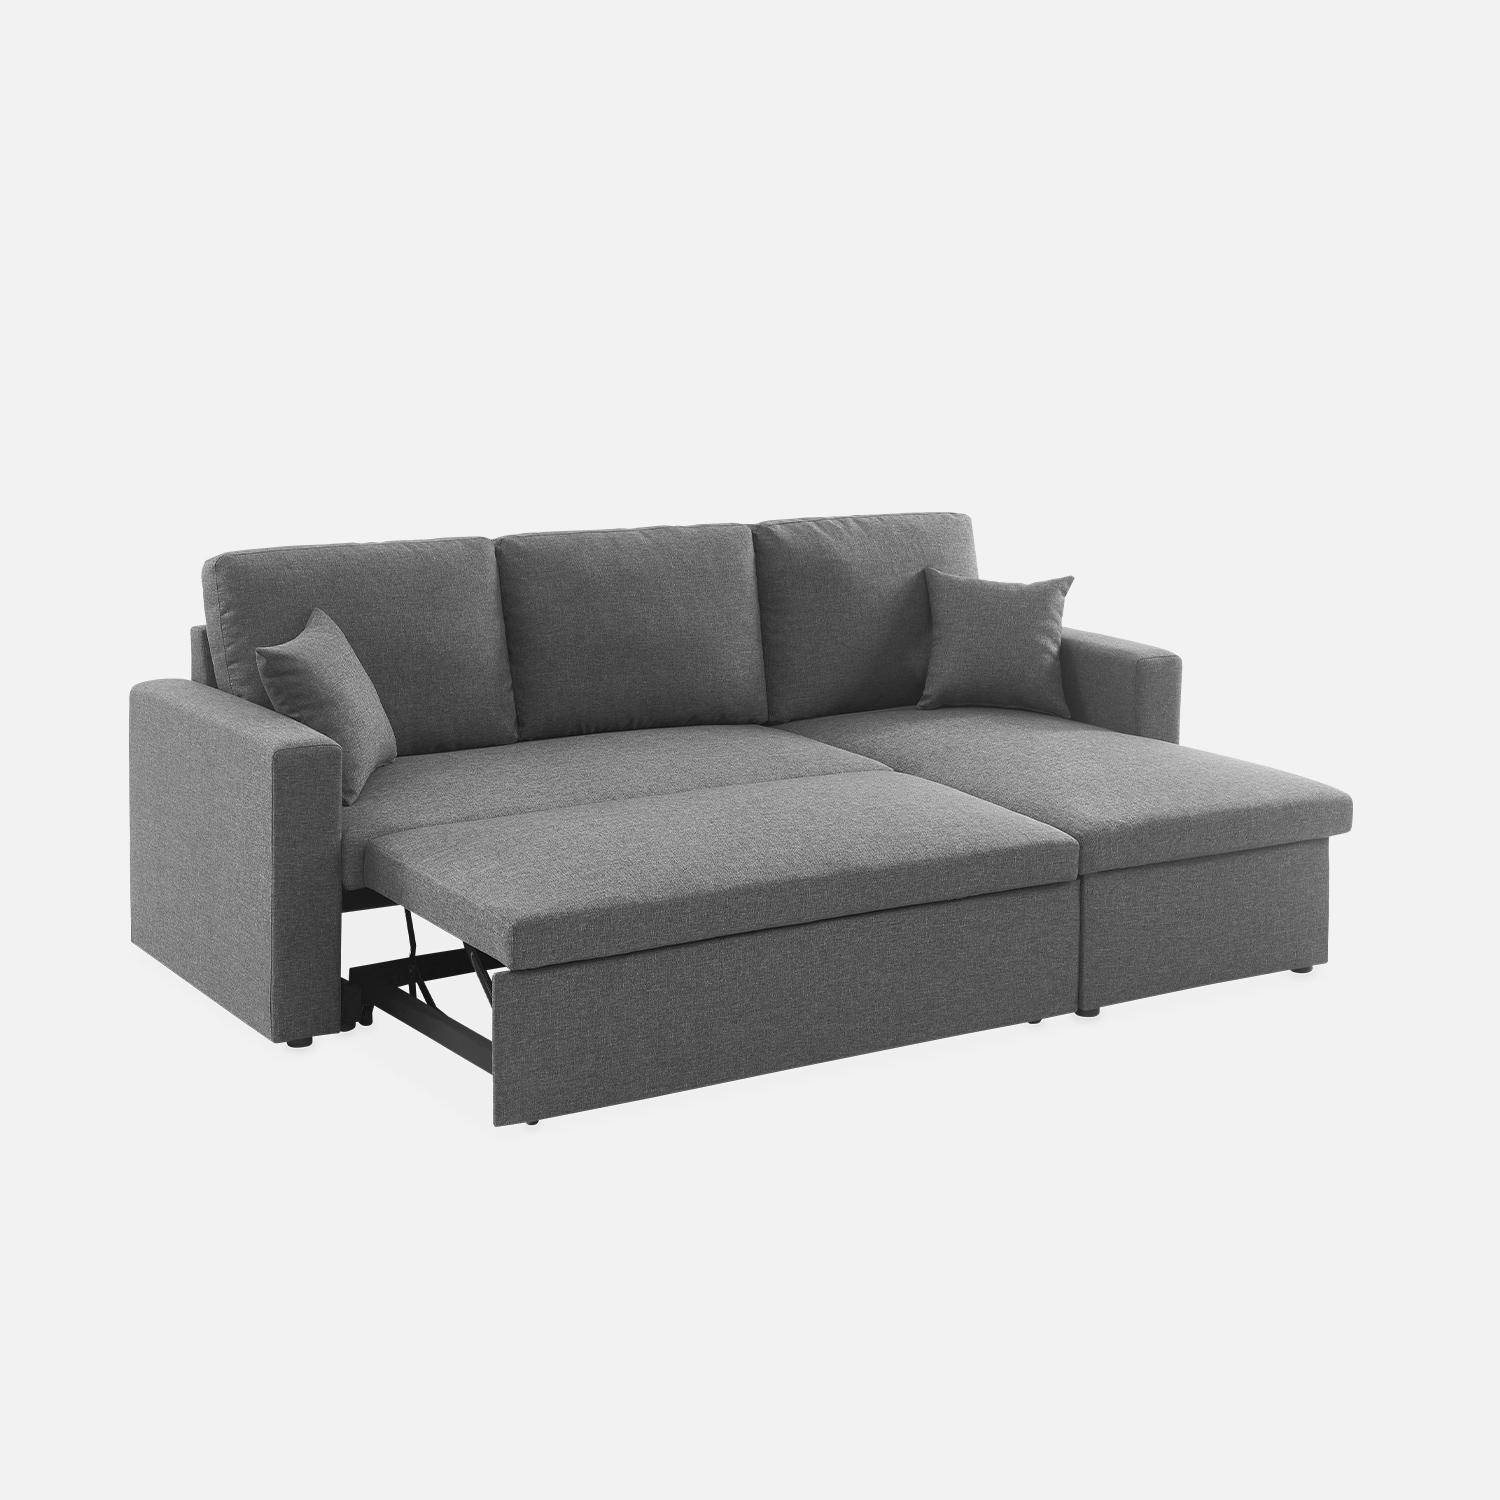 3-seater reversible grey corner sofa bed with storage box, : L219xD81xH68cm, IDA Photo8